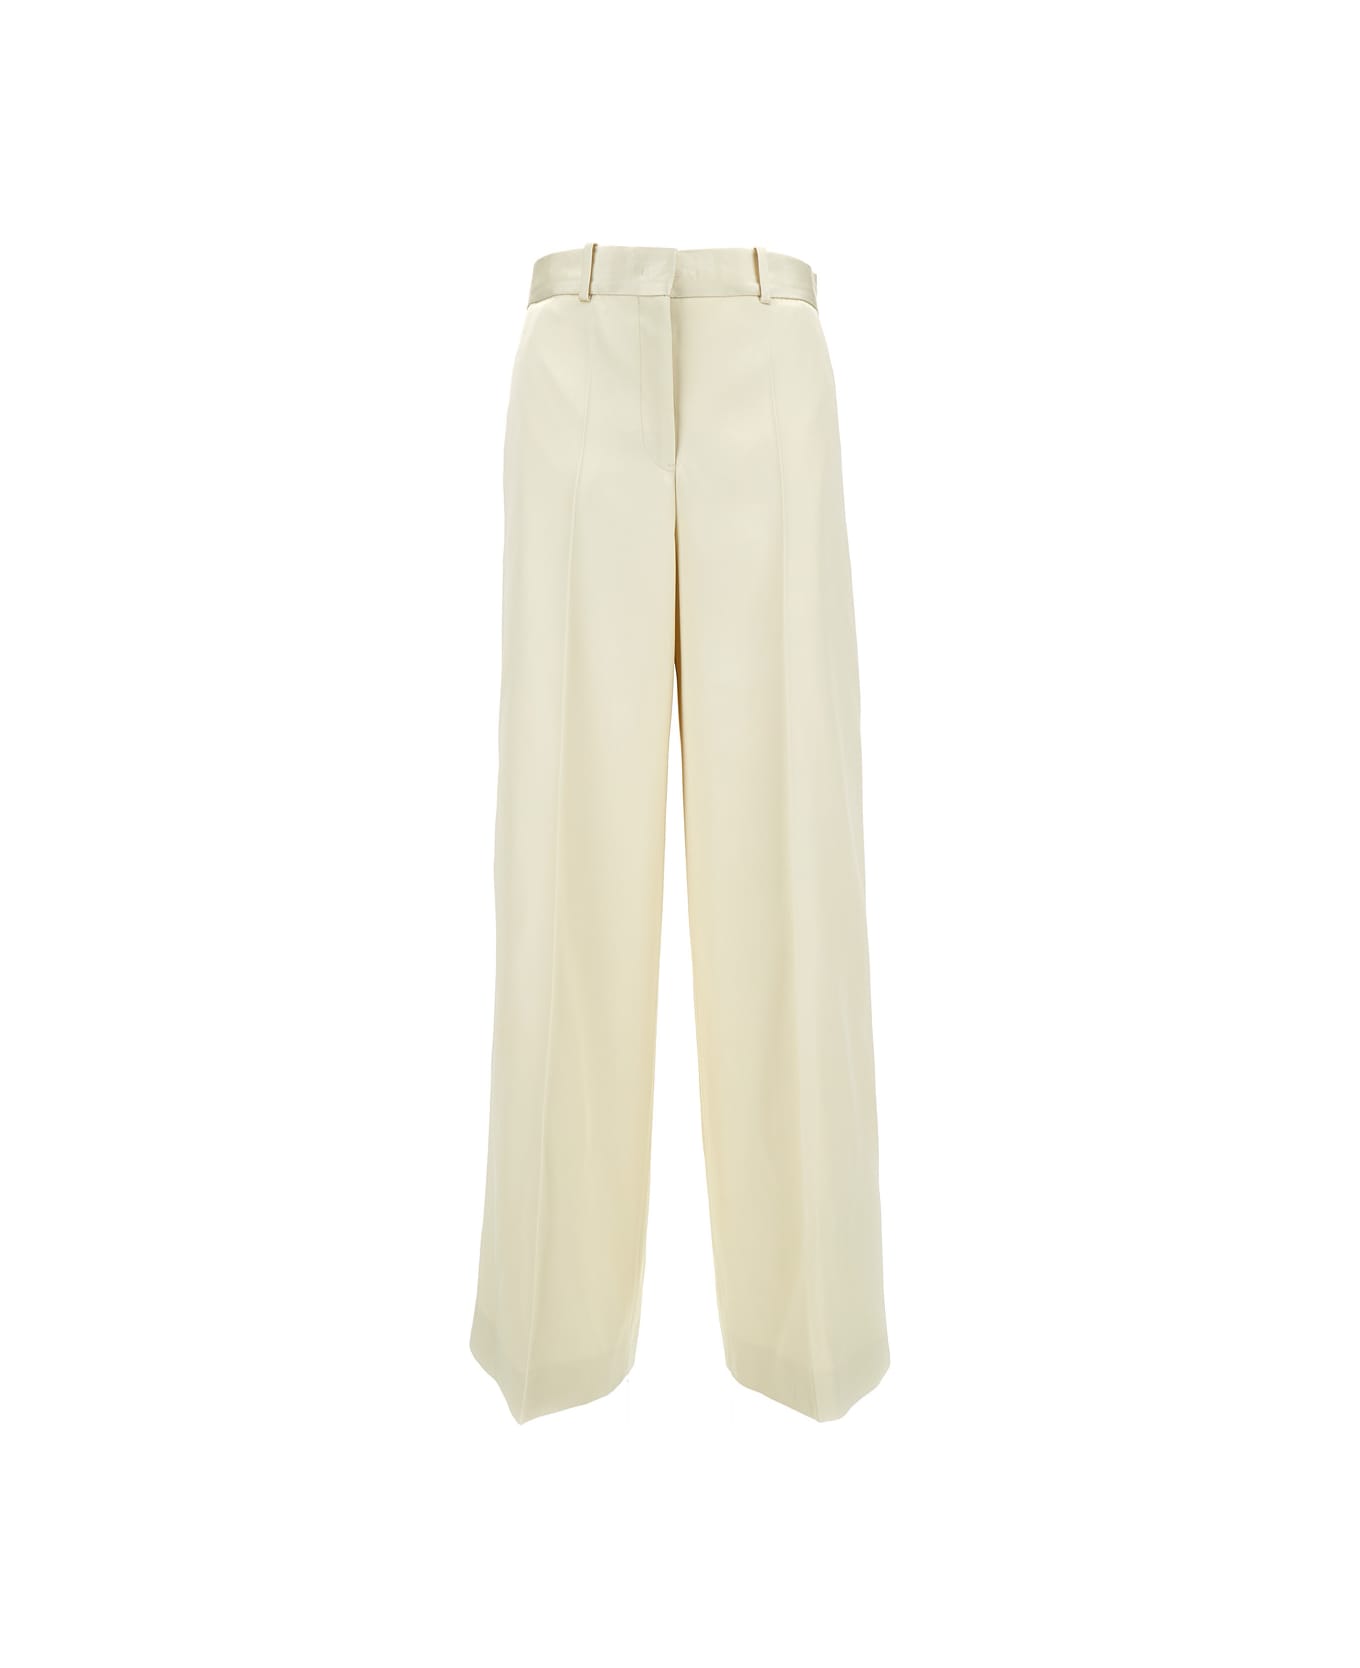 Jil Sander Beige High Waisted Tailoring Pants In Silk Blend Woman - Beige